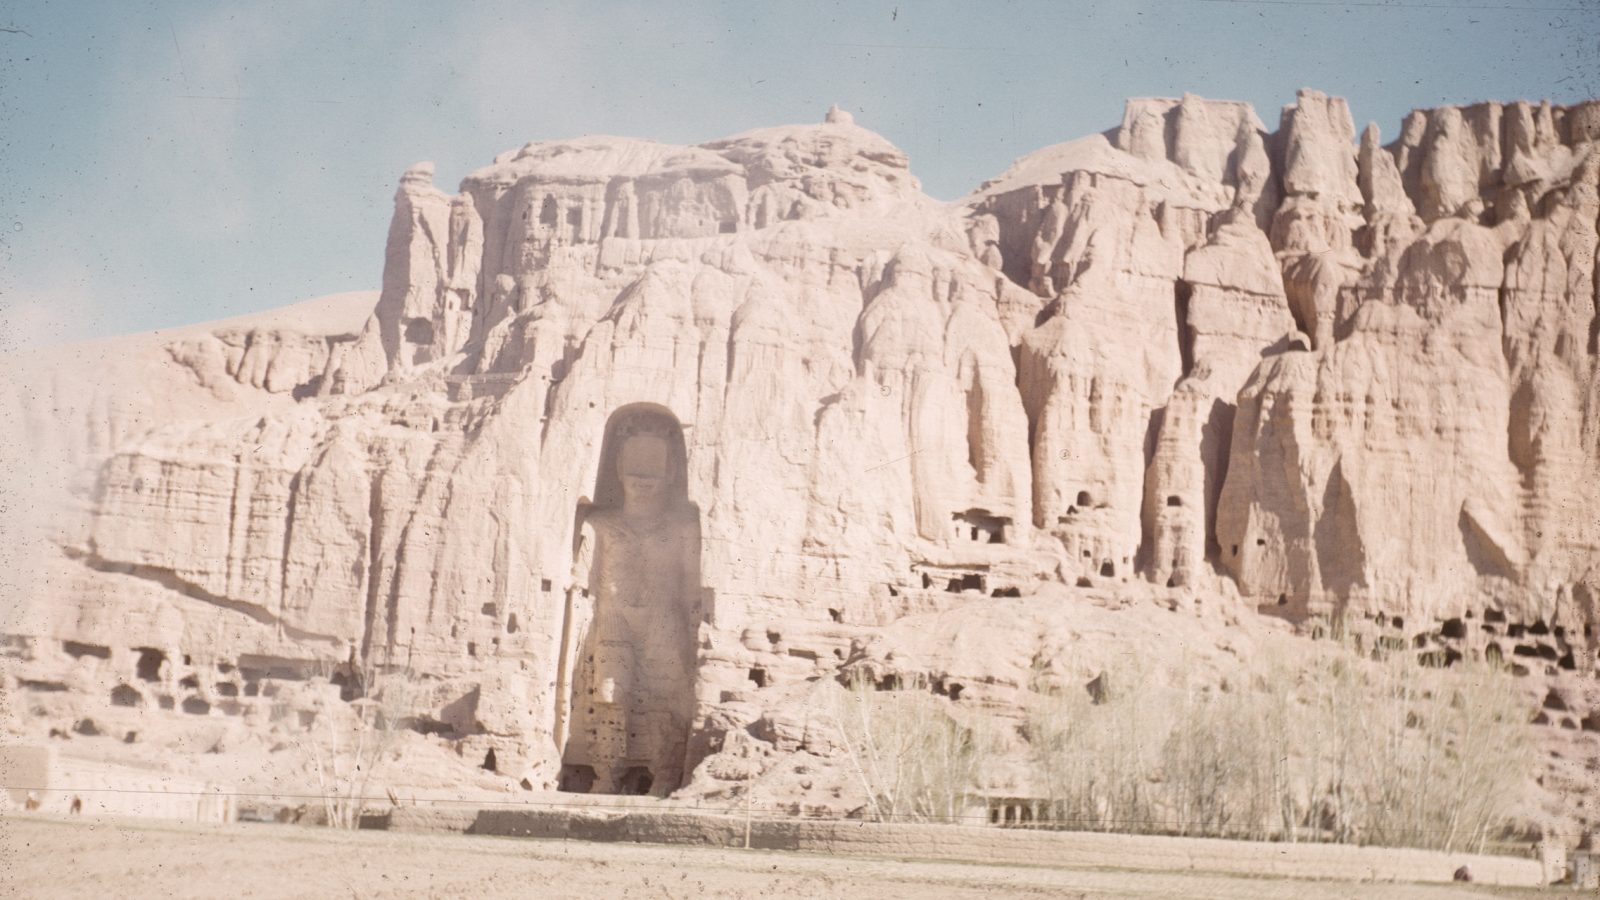 Bamiyan Buddhas in Afghanistan